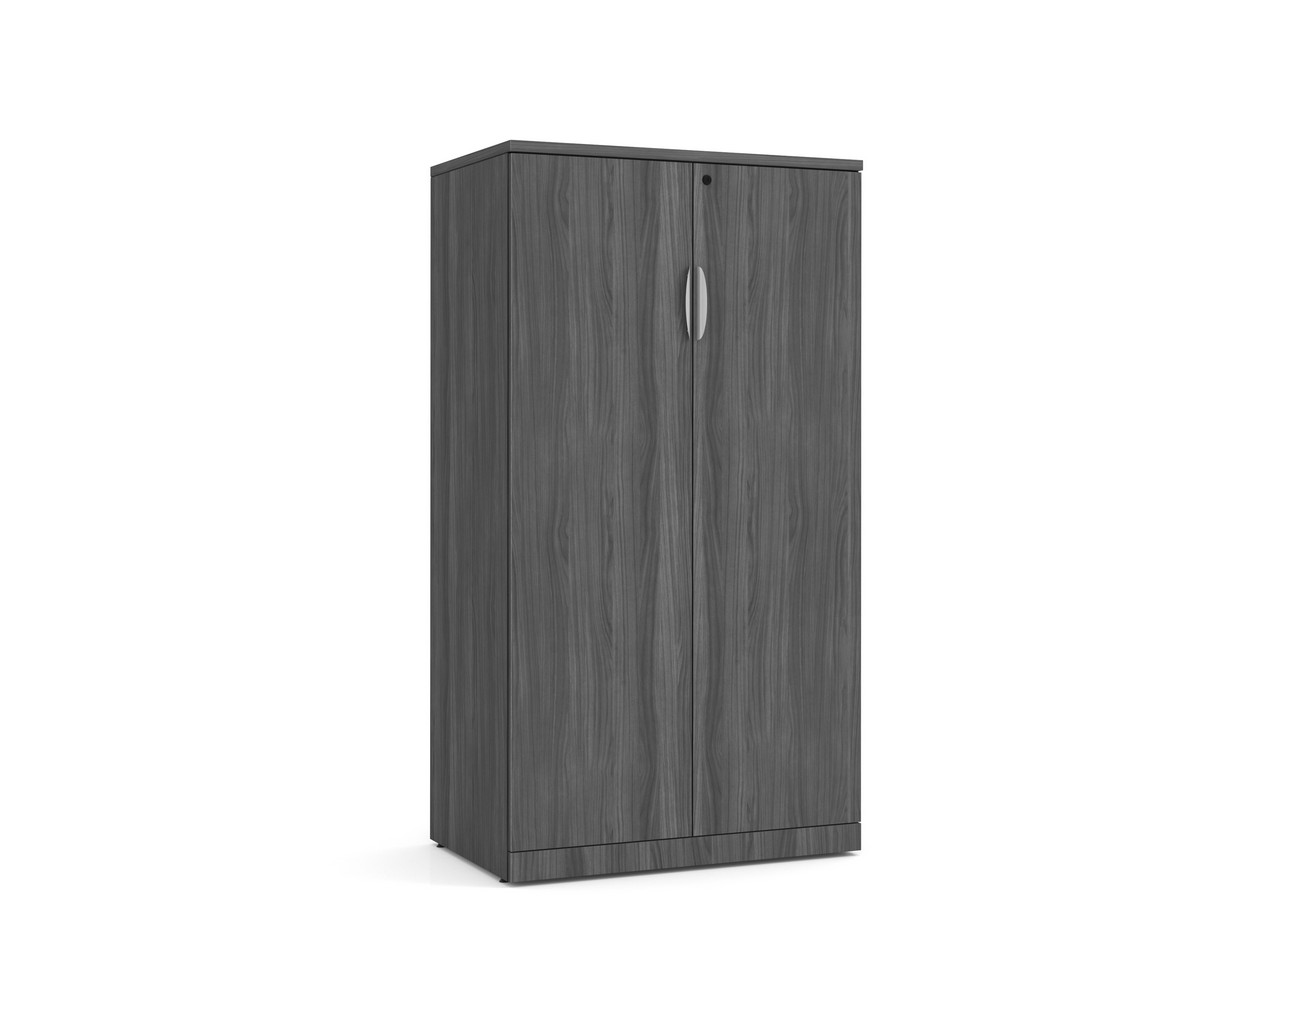 Locking Double Door Storage Cabinet 65 Inch with Newport Grey Finish